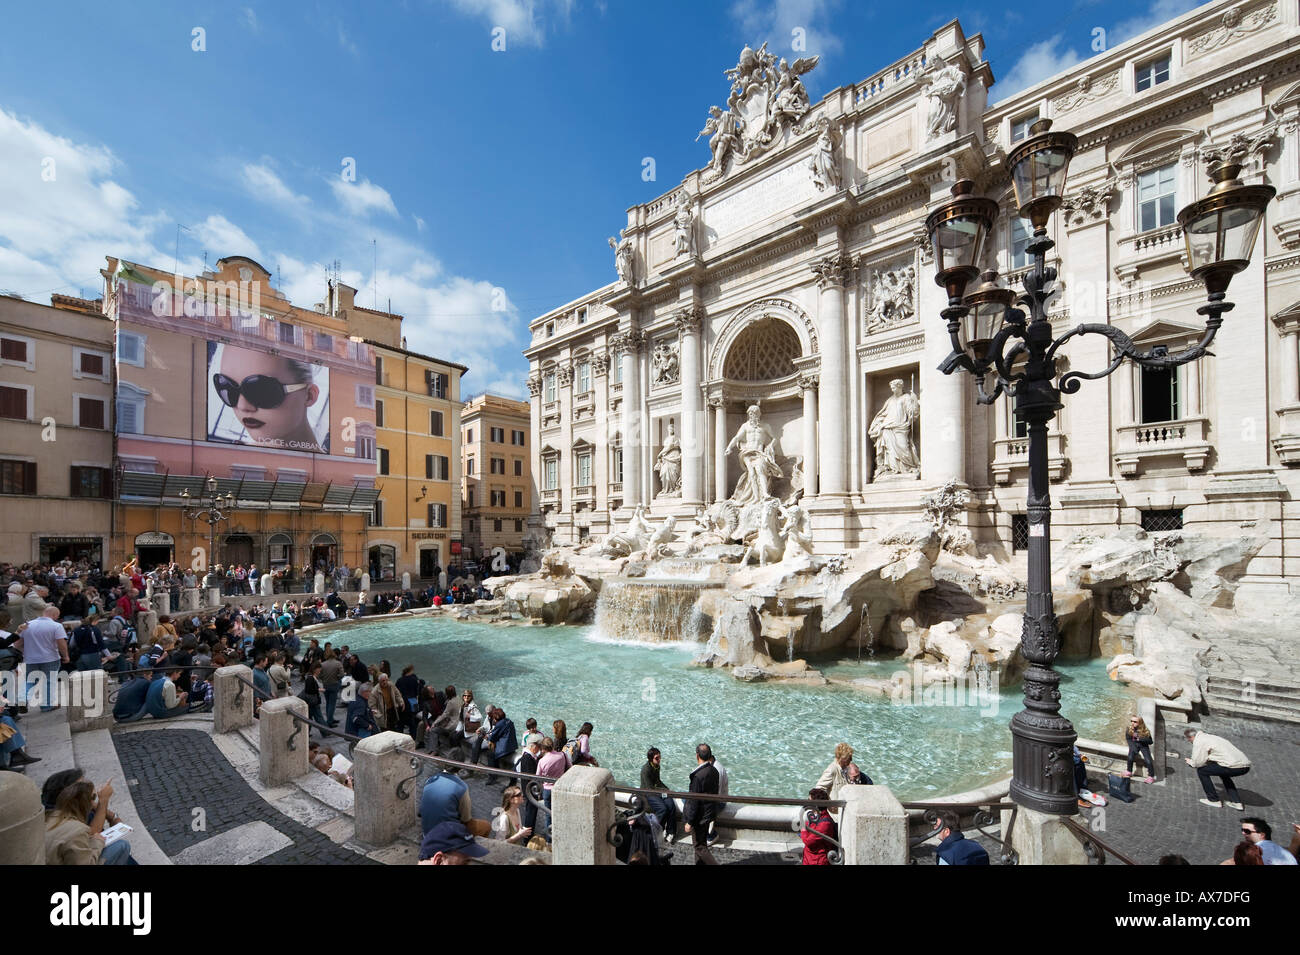 Trevi Fountain, Rome. The Trevi Fountain or Fontana di Trevi with a billboard for Dolce e Gabbana sunglasses to the left, Rome, Italy Stock Photo